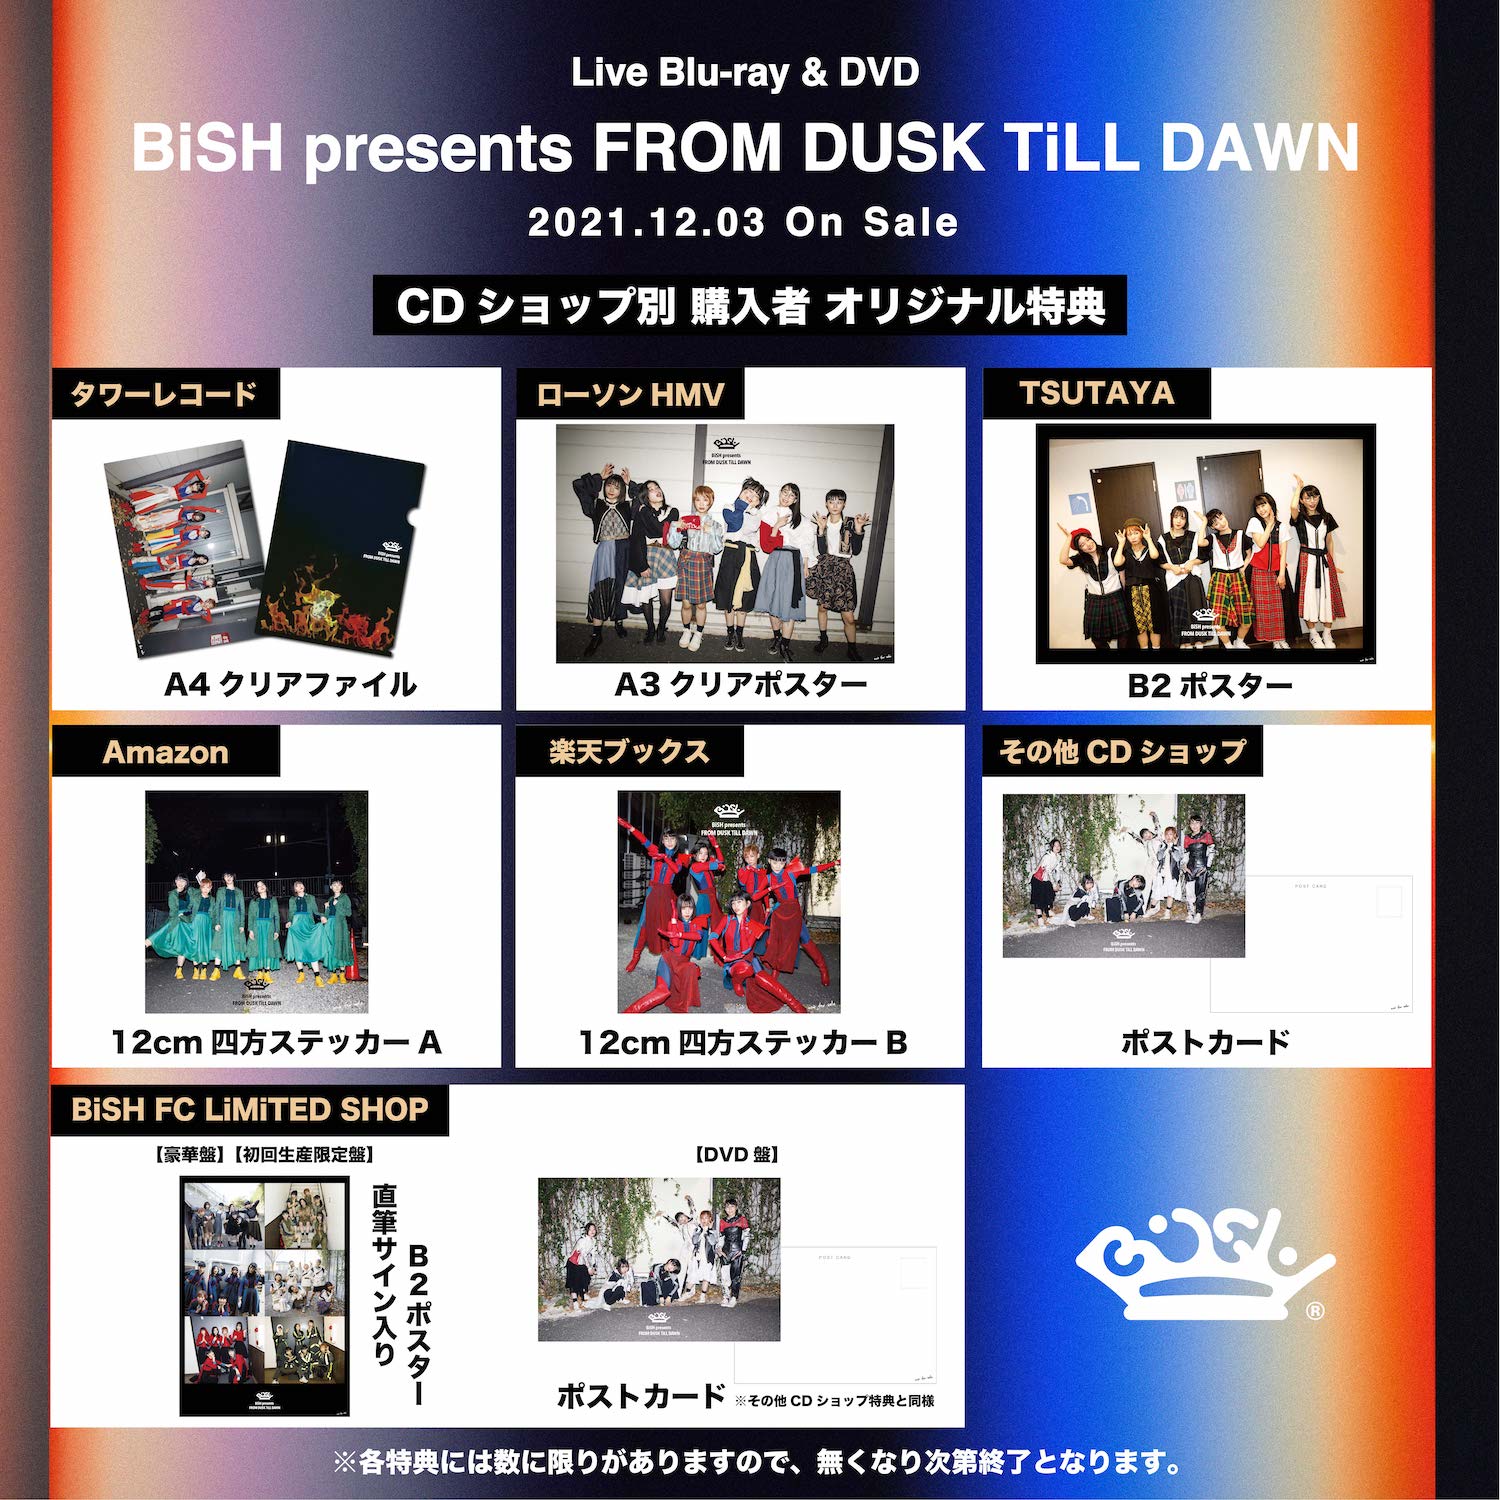 BiSH presents FROM DUSK TiLL DAWN 特典付き | lp.4dplanejados.com.br